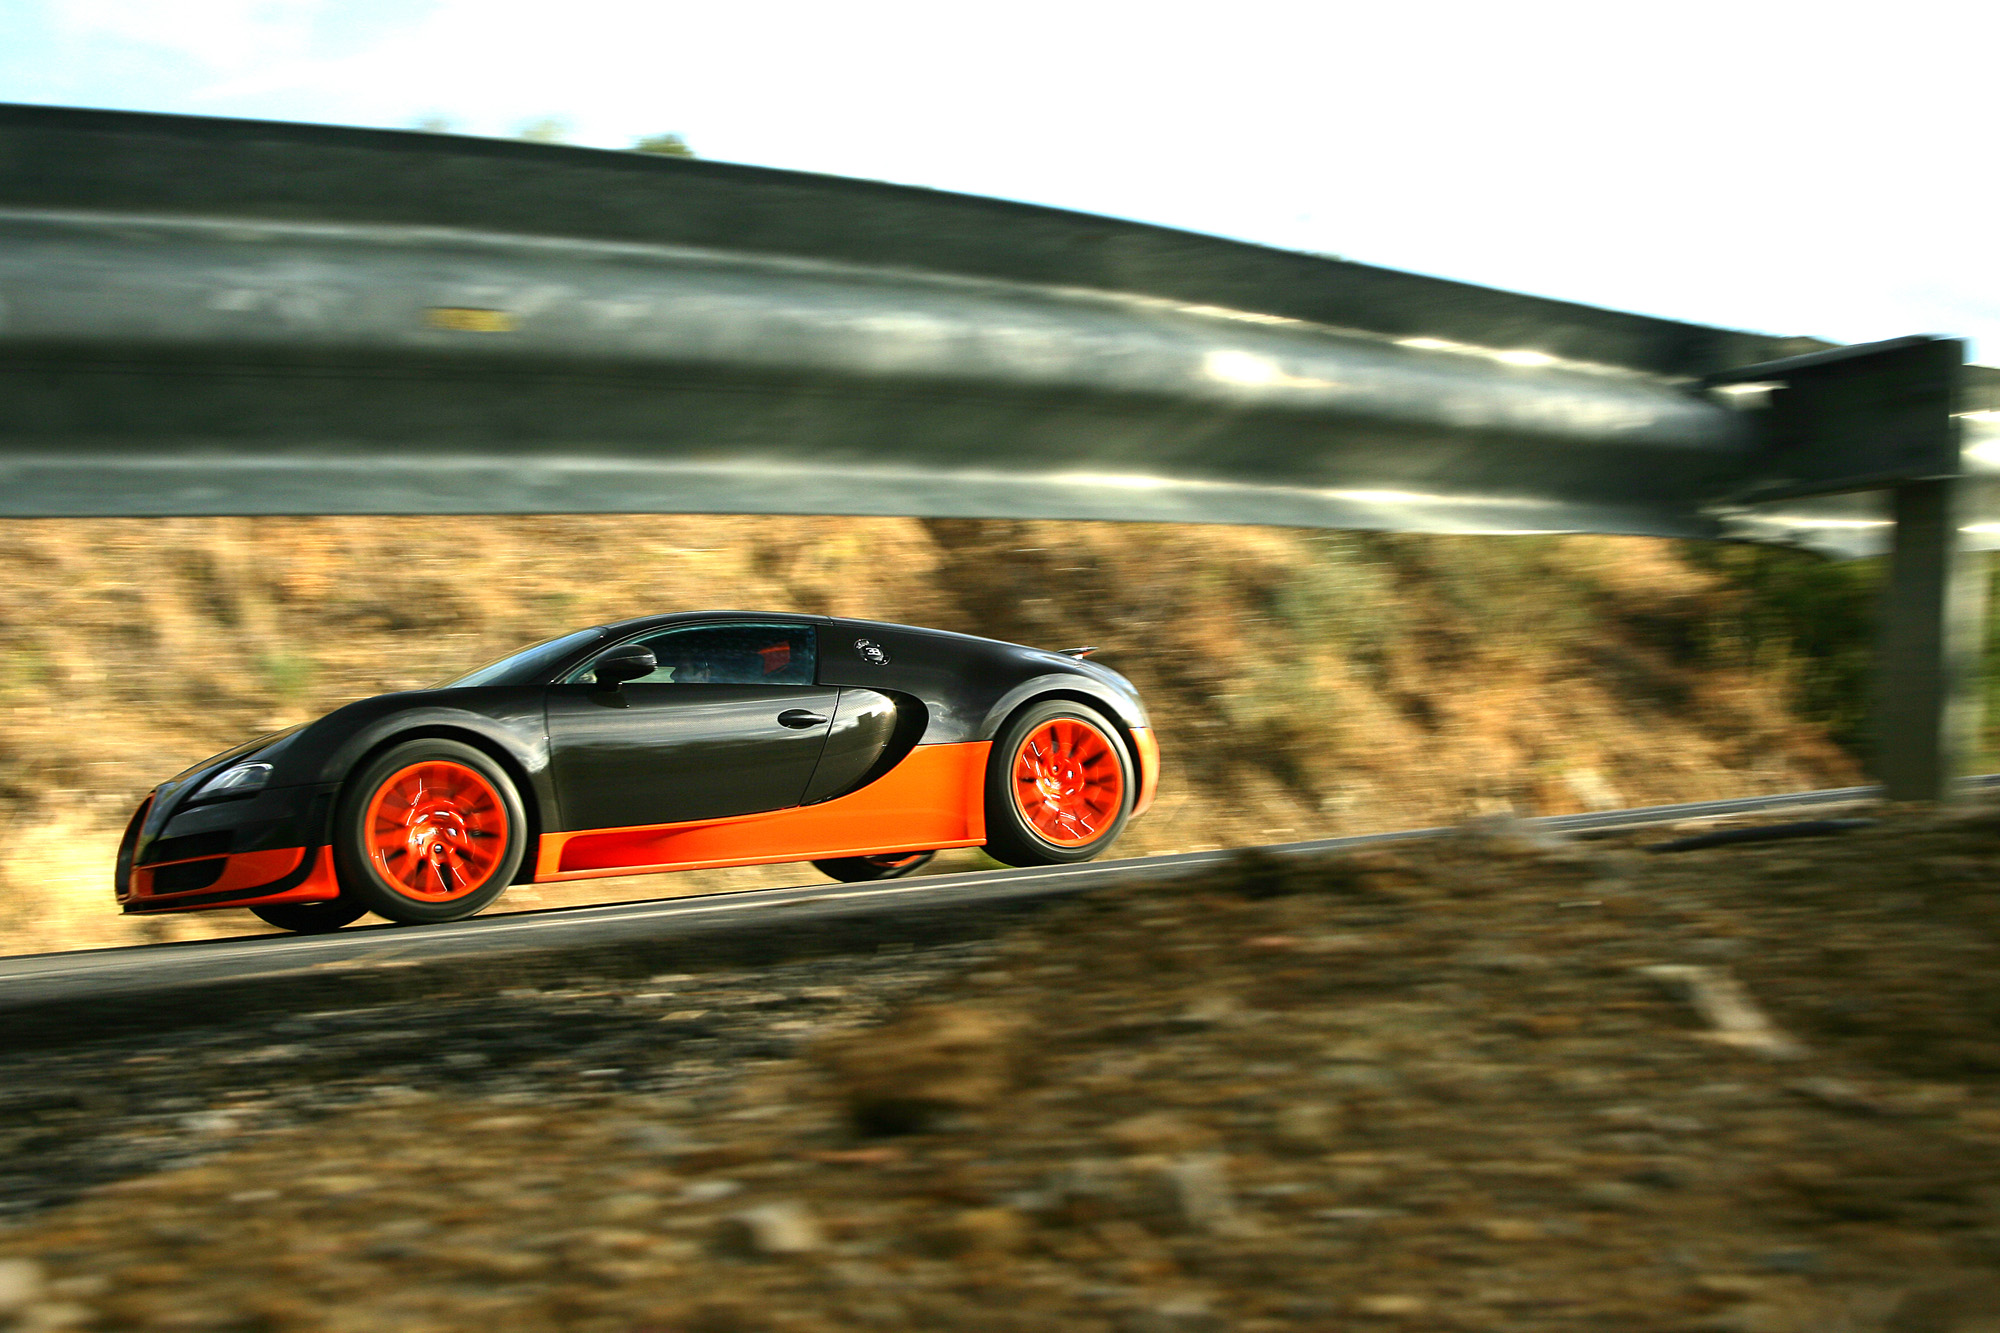 The Bugatti Veyron Super